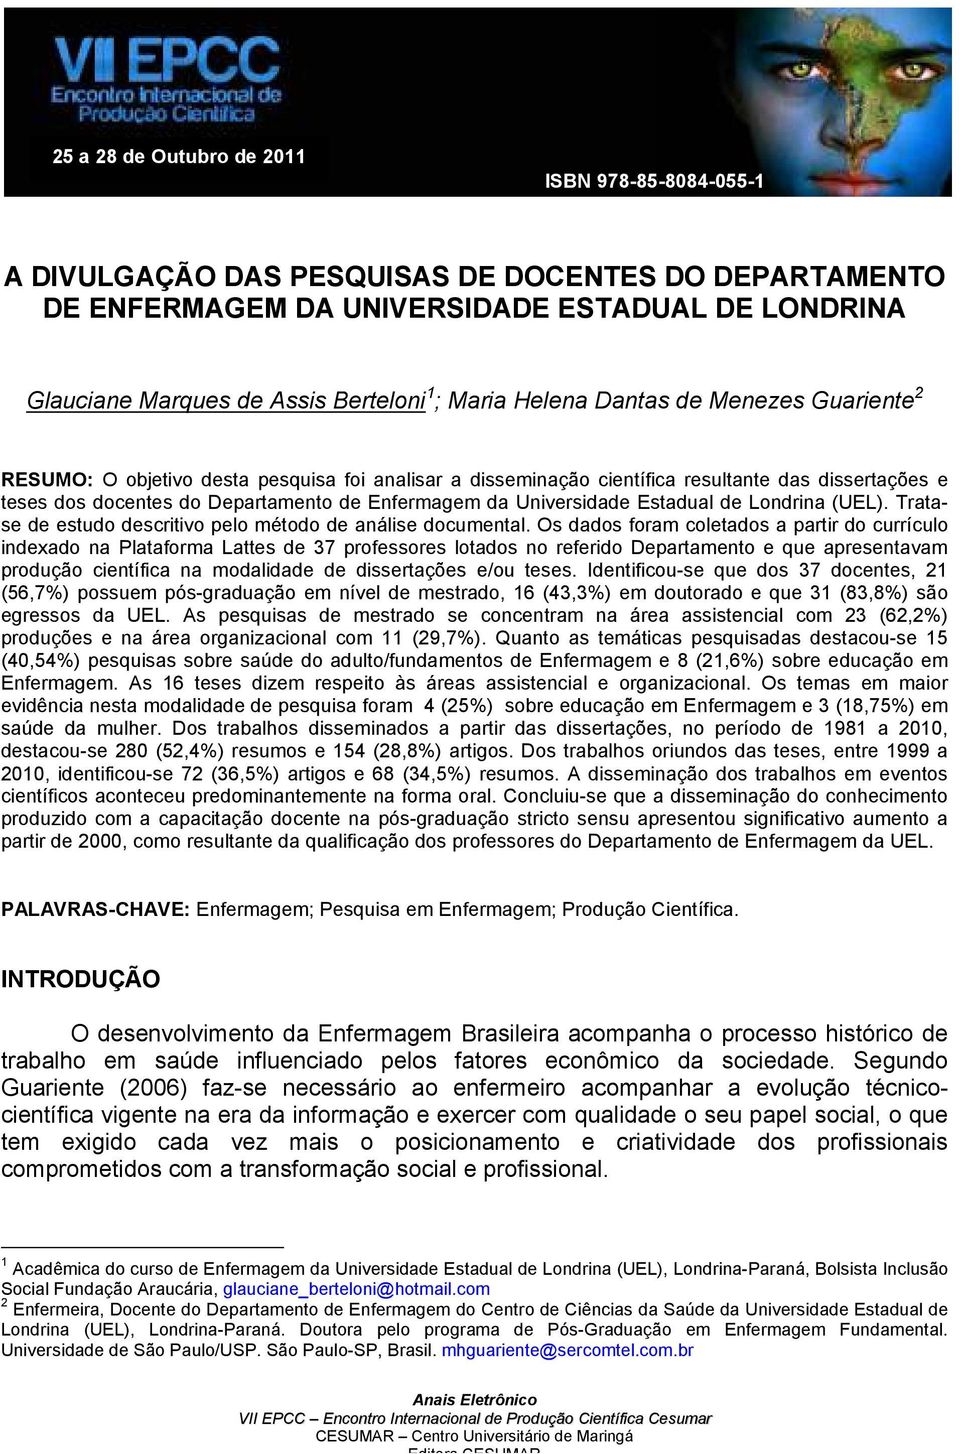 Universidade Estadual de Londrina (UEL). Tratase de estudo descritivo pelo método de análise documental.